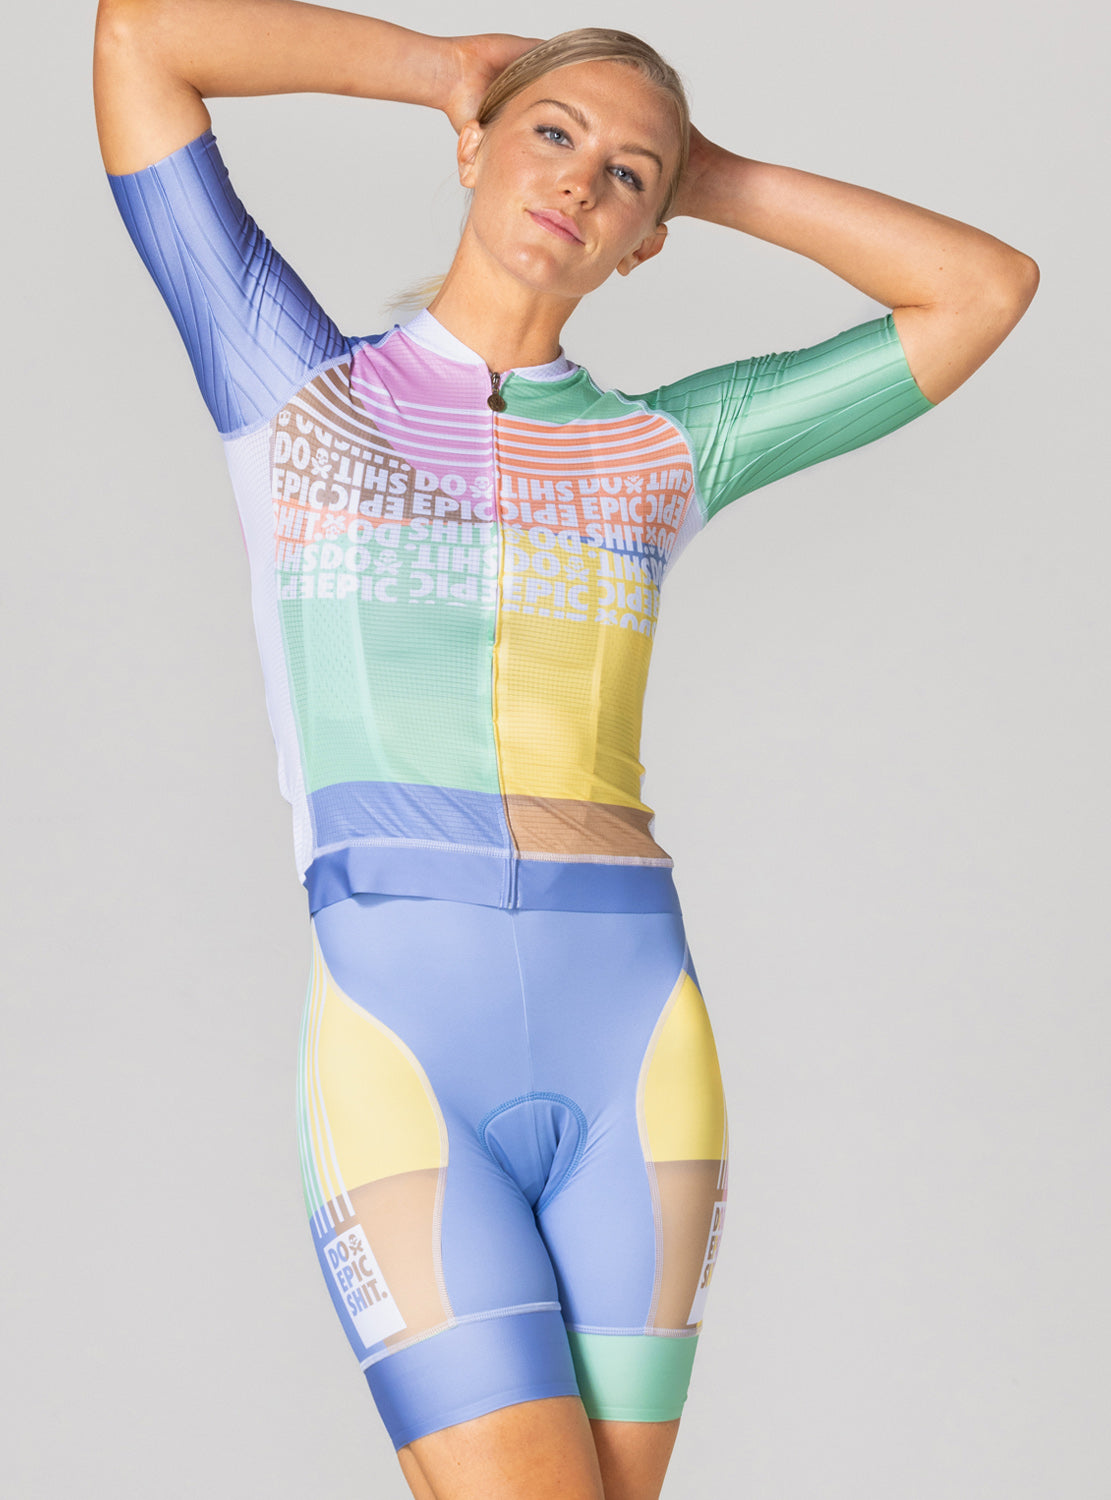 betty designs do epic shit womens cycling jersey cycling short